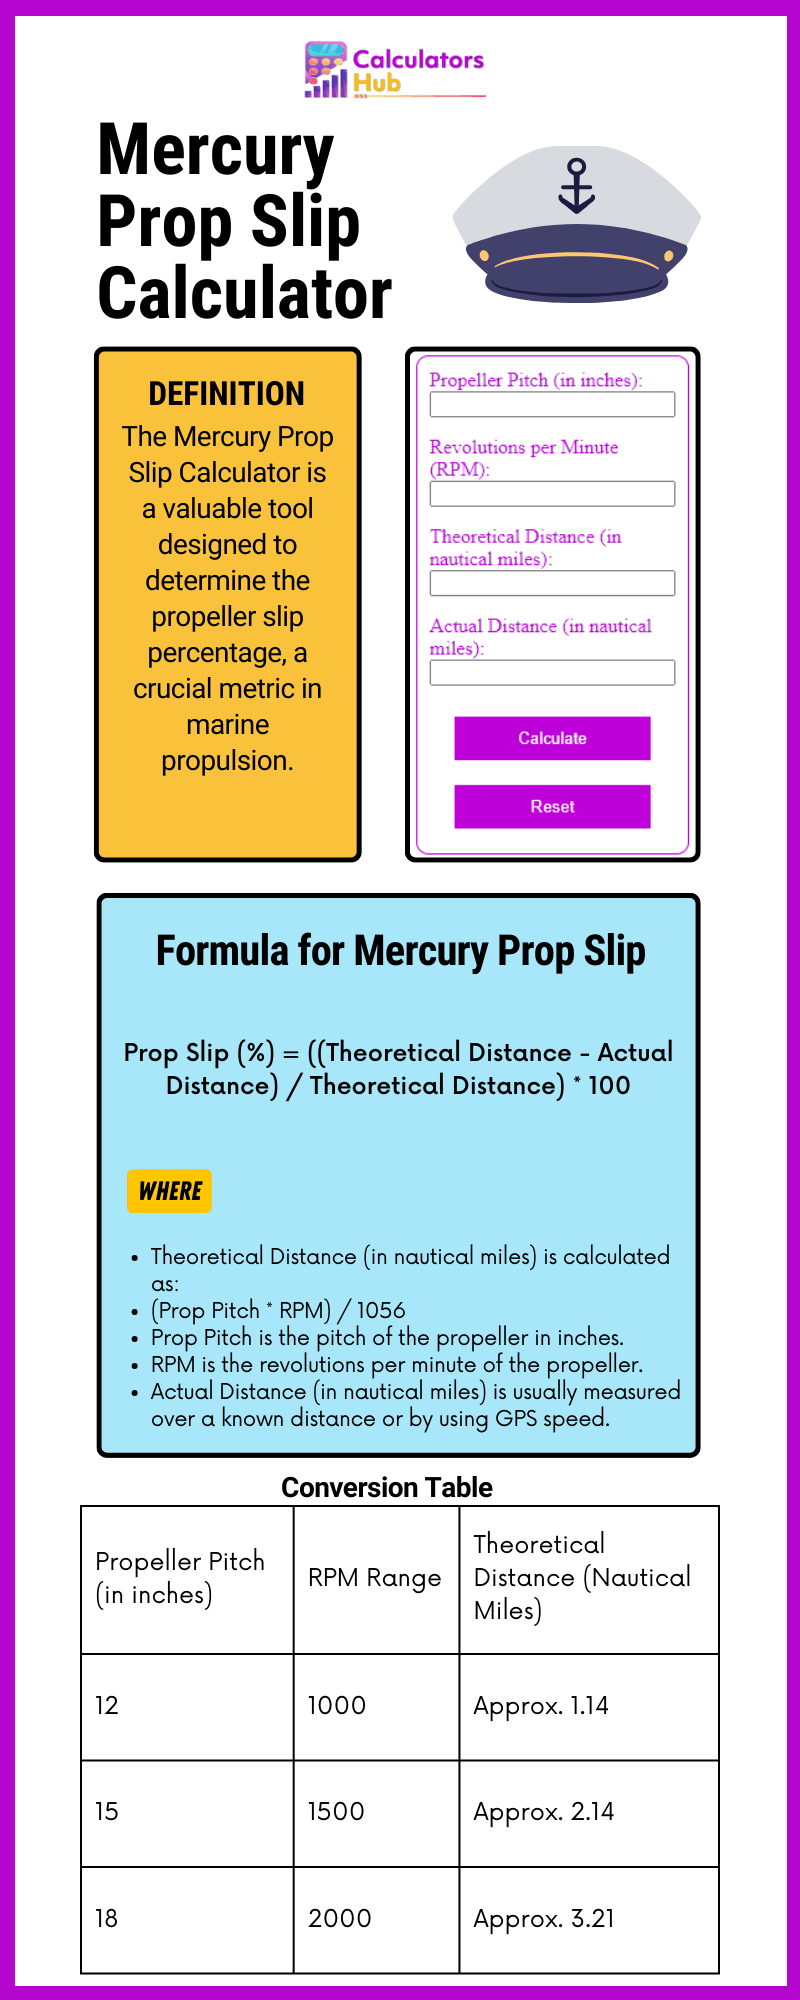 Mercury Prop Slip Calculator